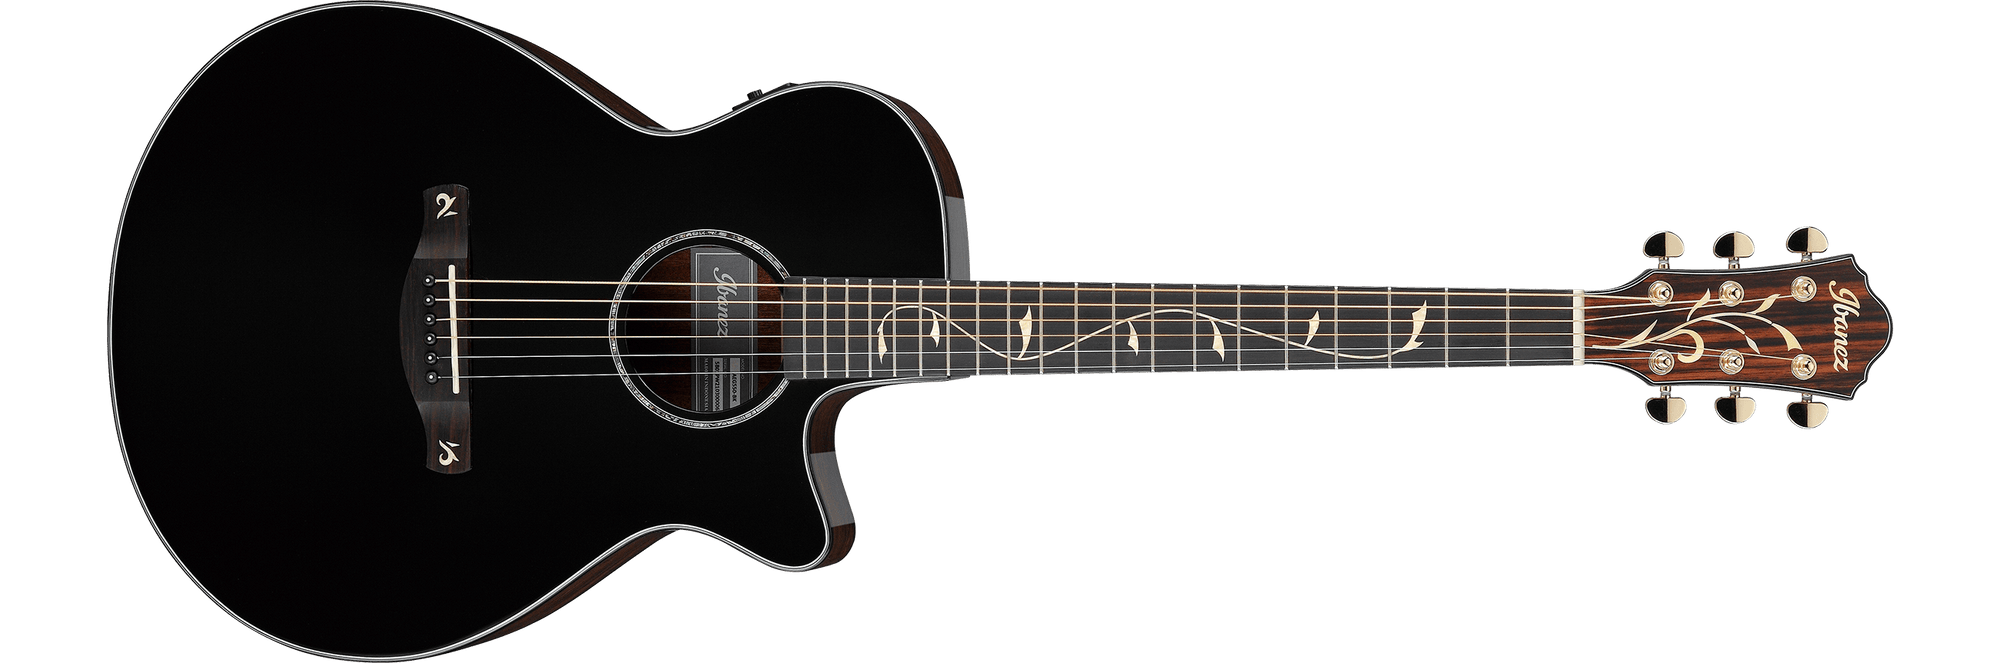 AEG550BK AEG Series Electric Acoustic Guitar, Black